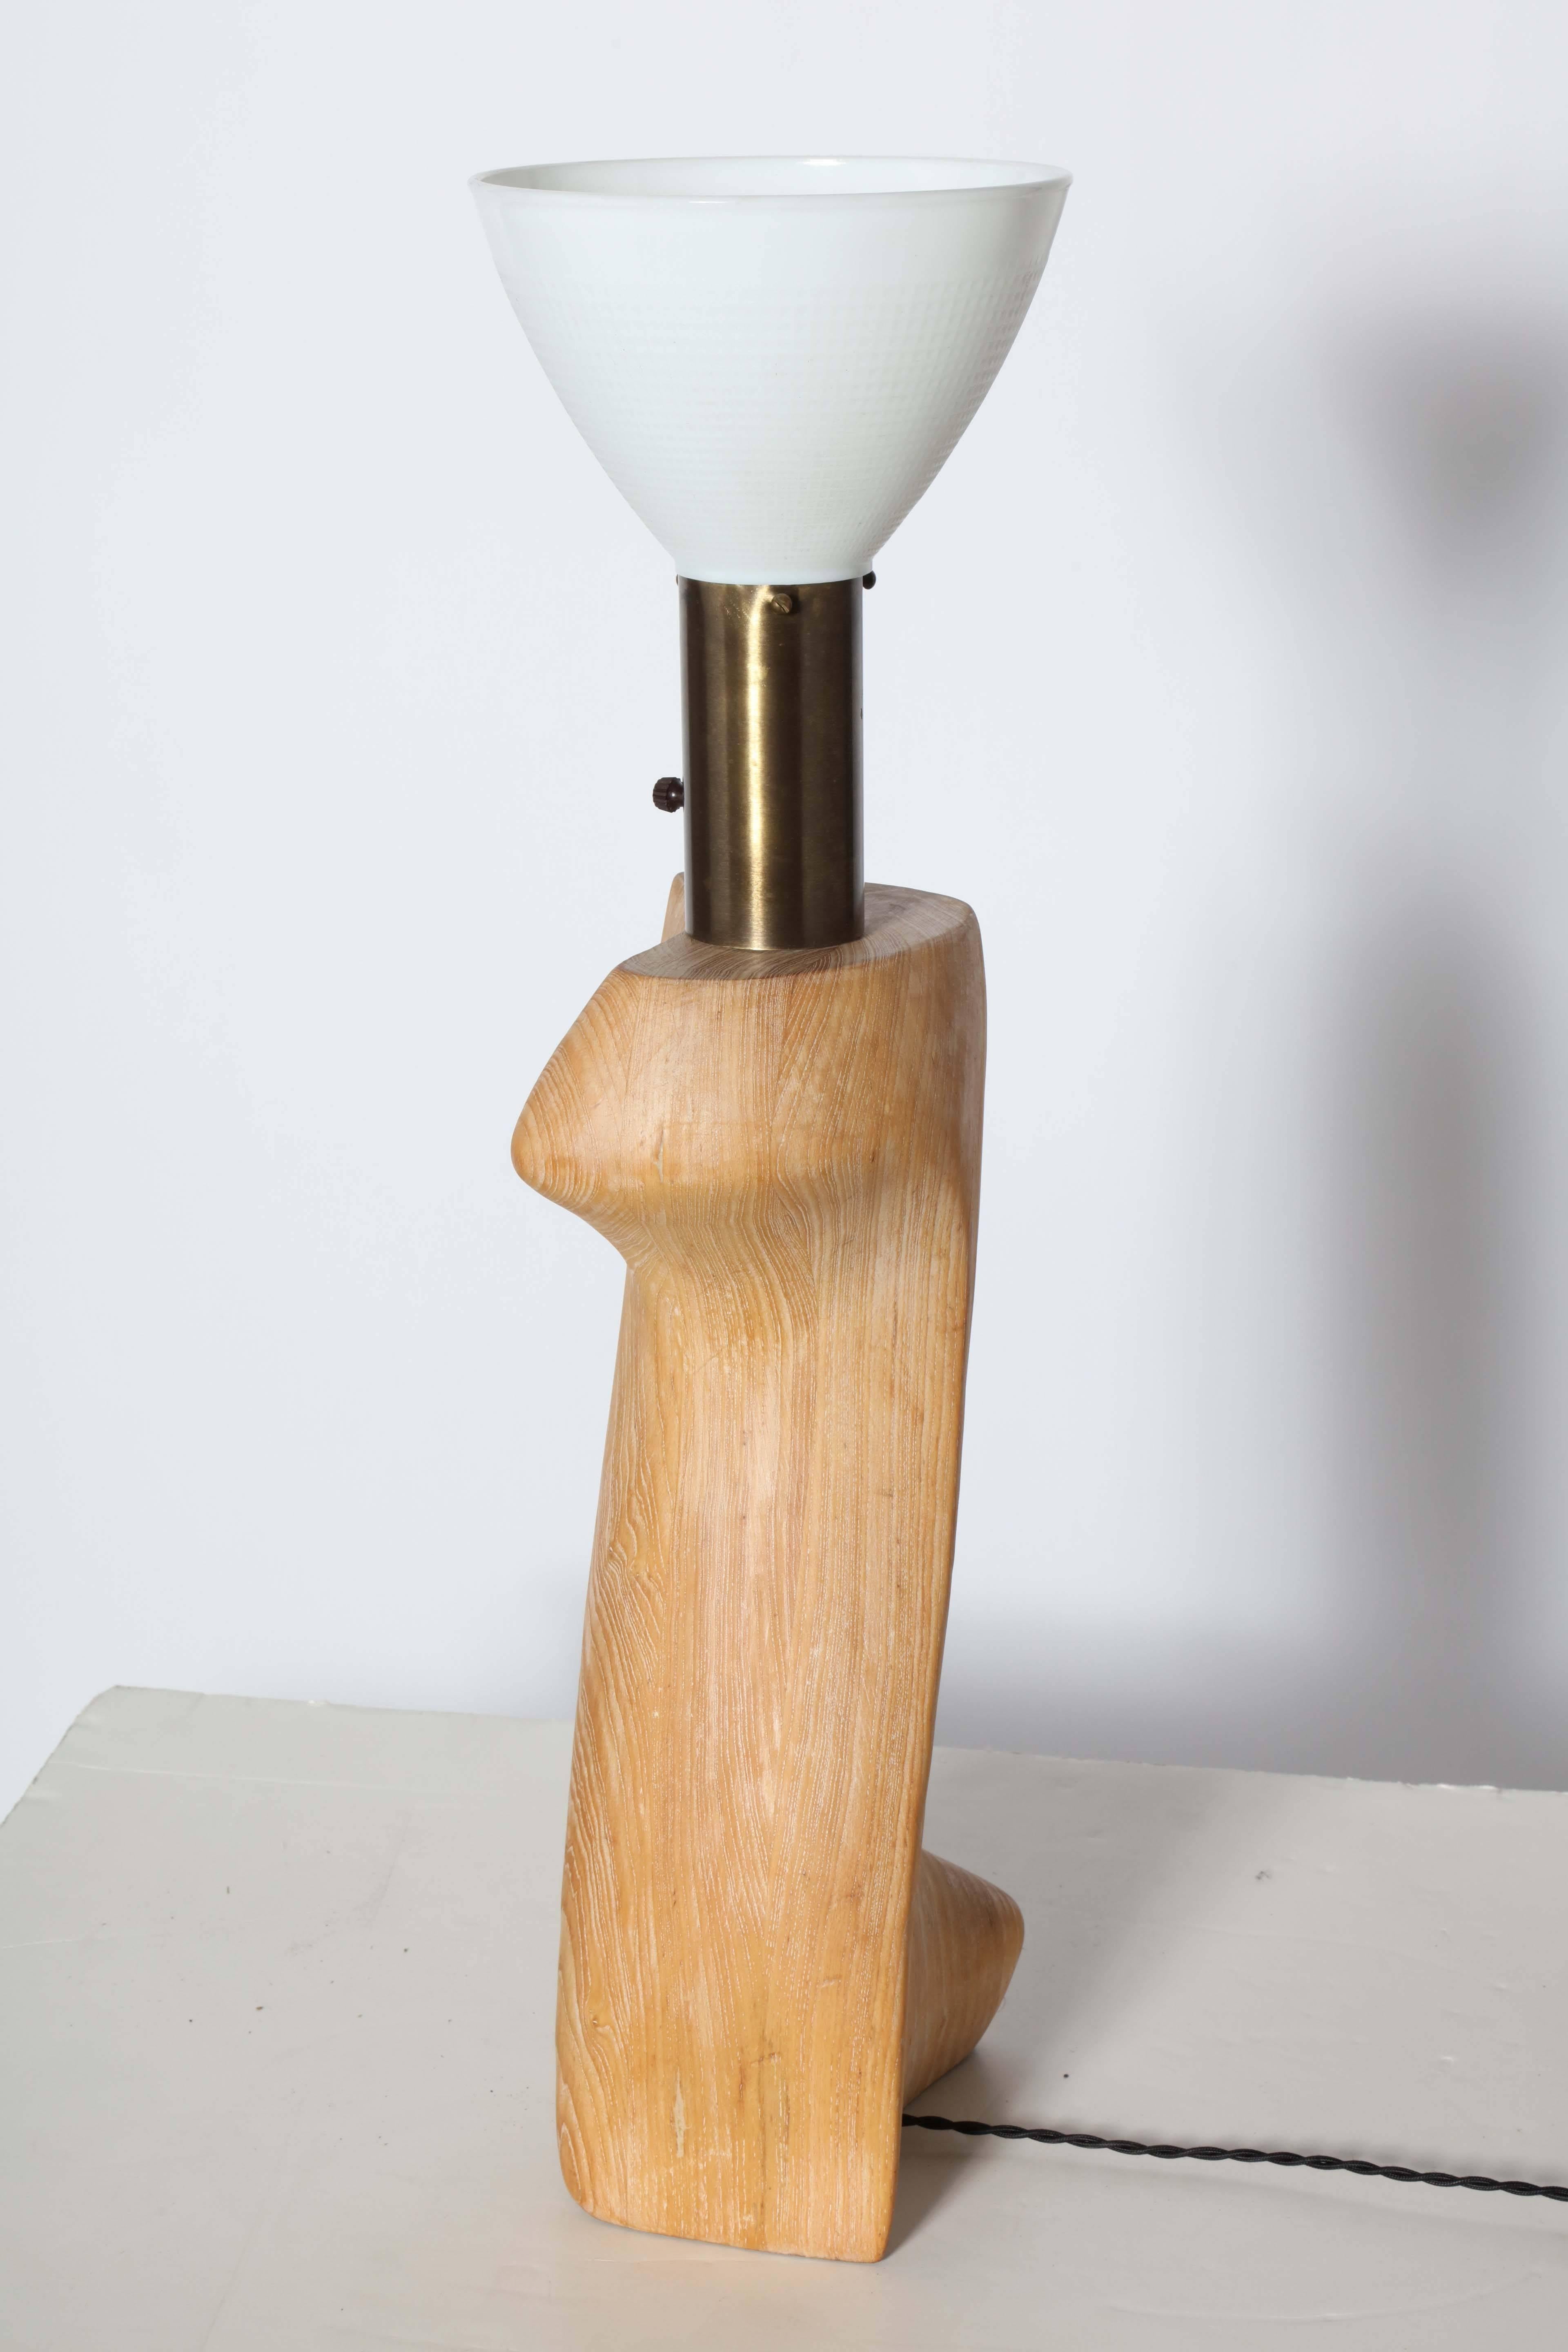 Yasha Heifetz Cerused Ash Table Lamp with Milk Glass Shade, 1940s 3